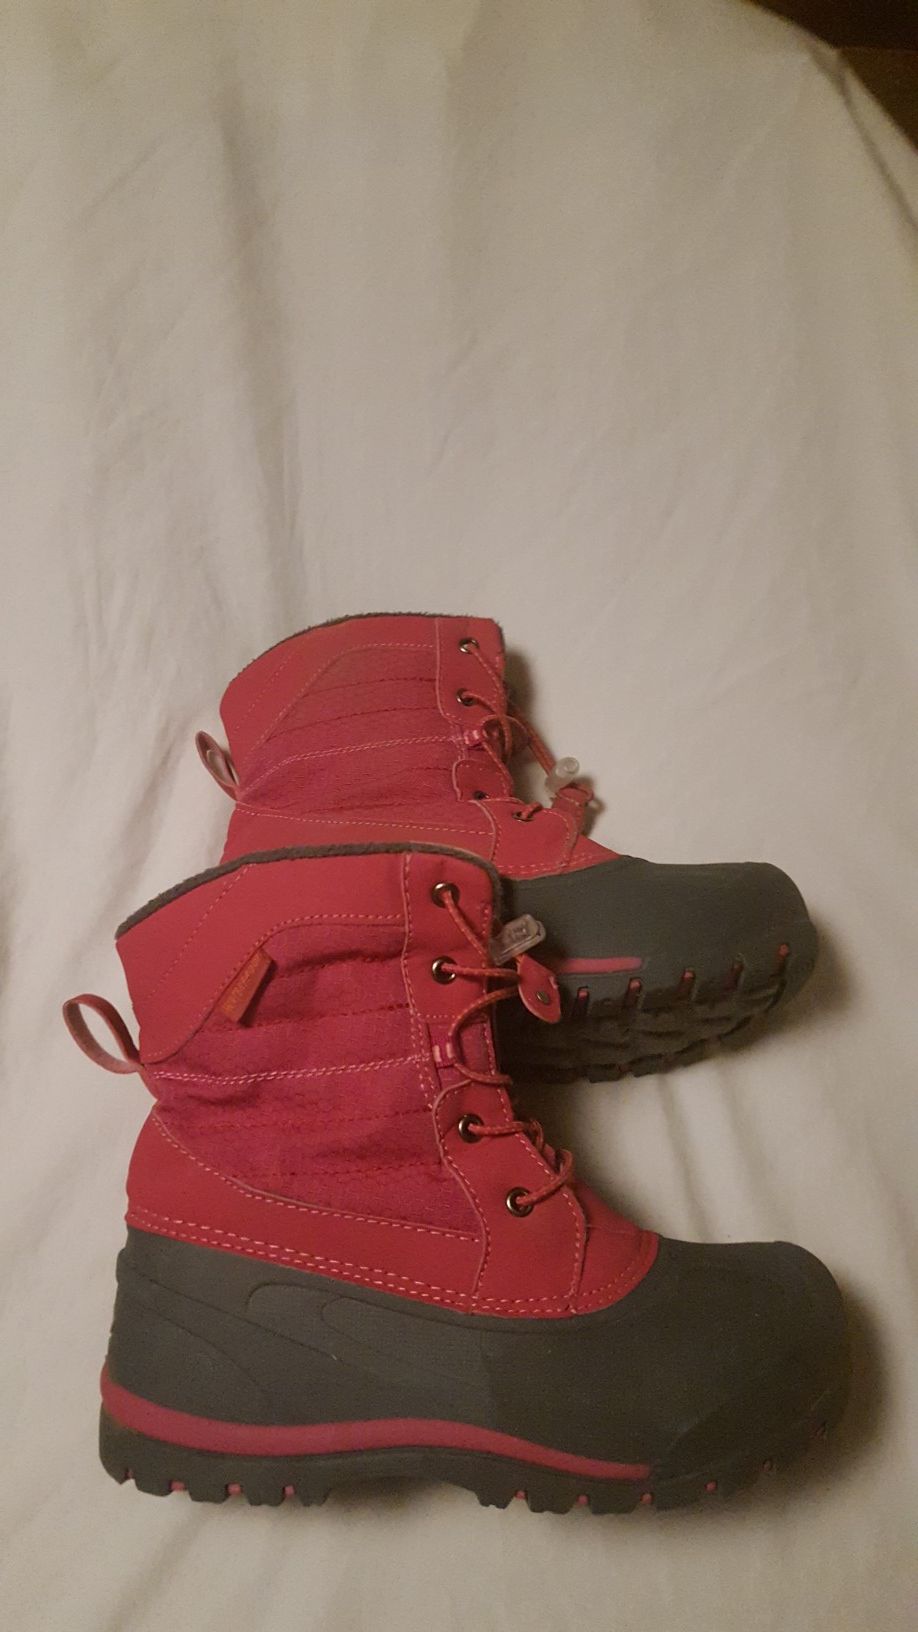 Northside waterproof winter boots big girls size 4